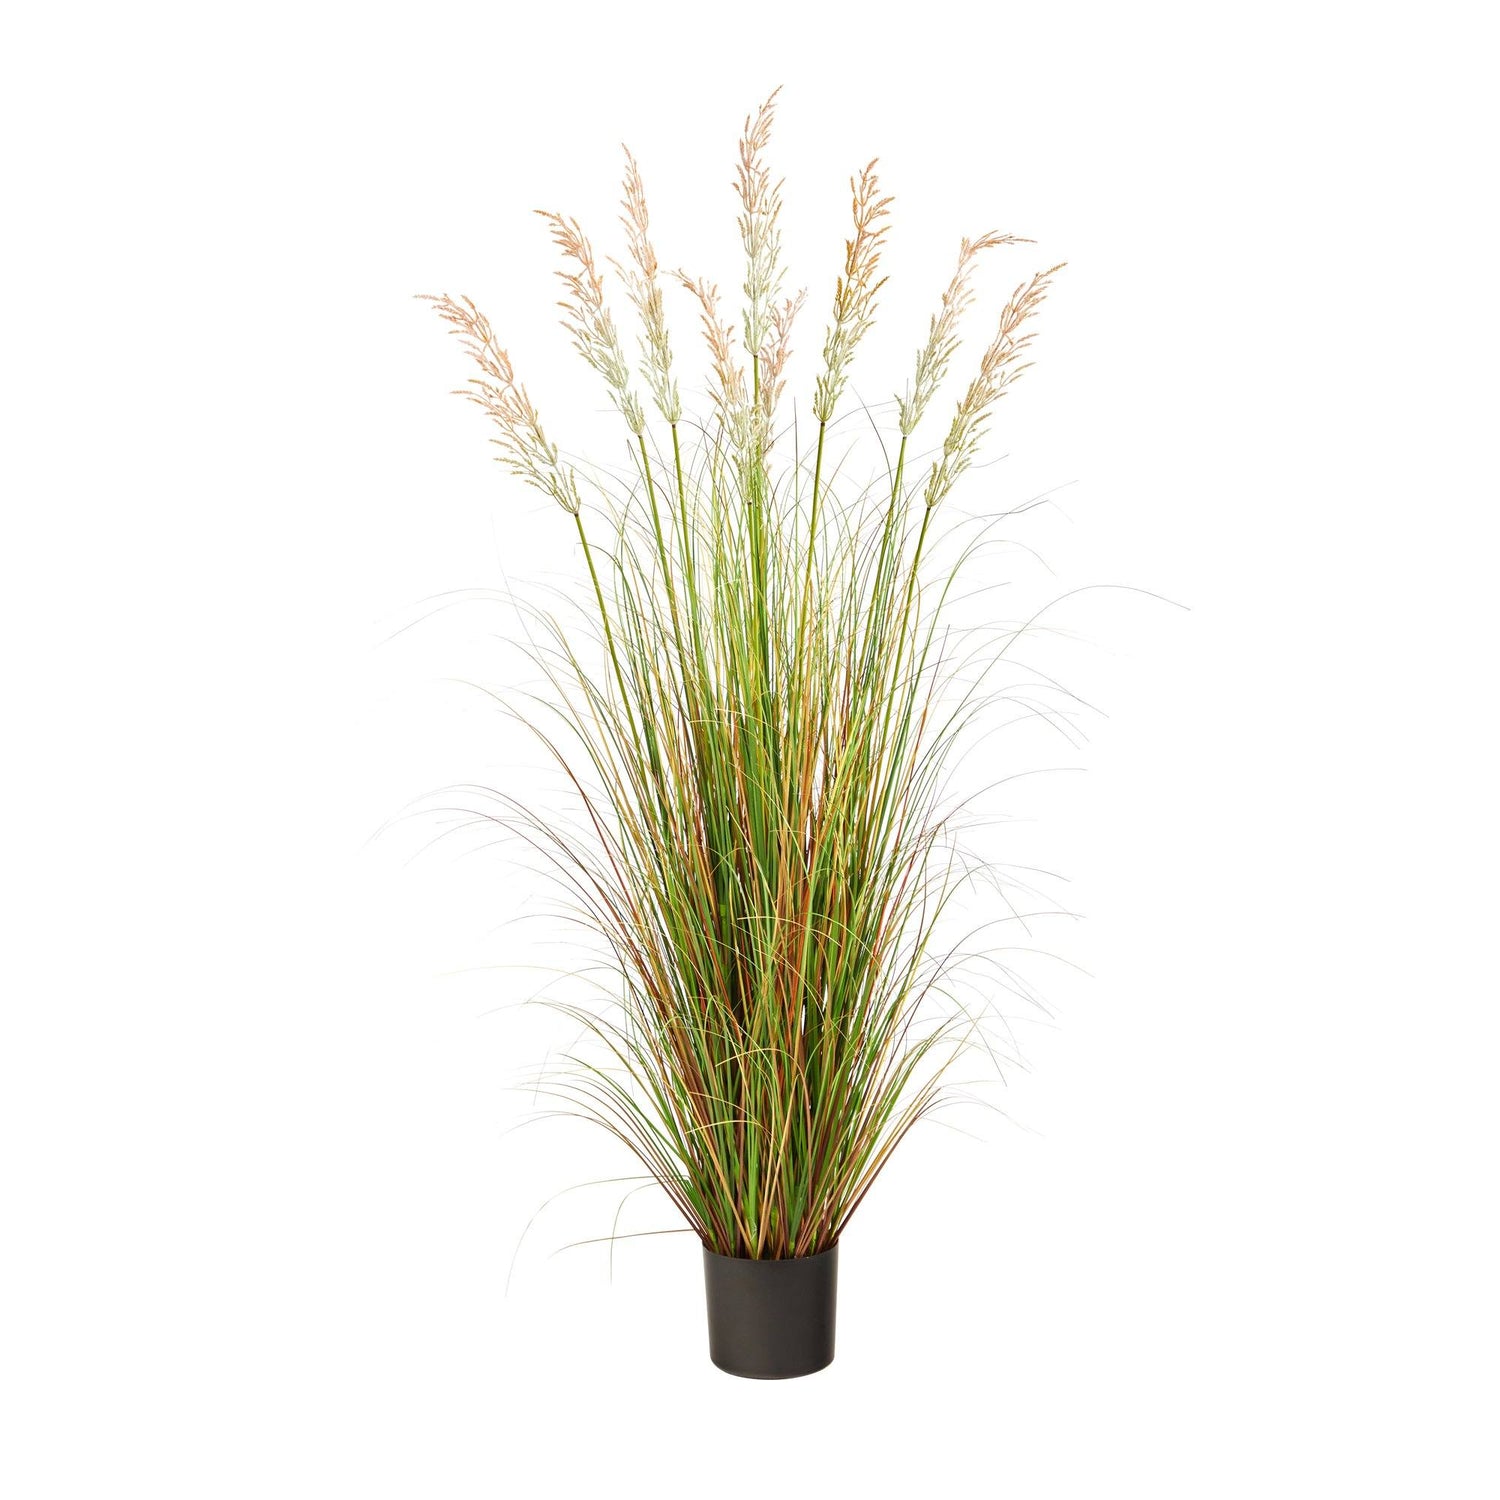 5.5’ Plum Grass Artificial Plant